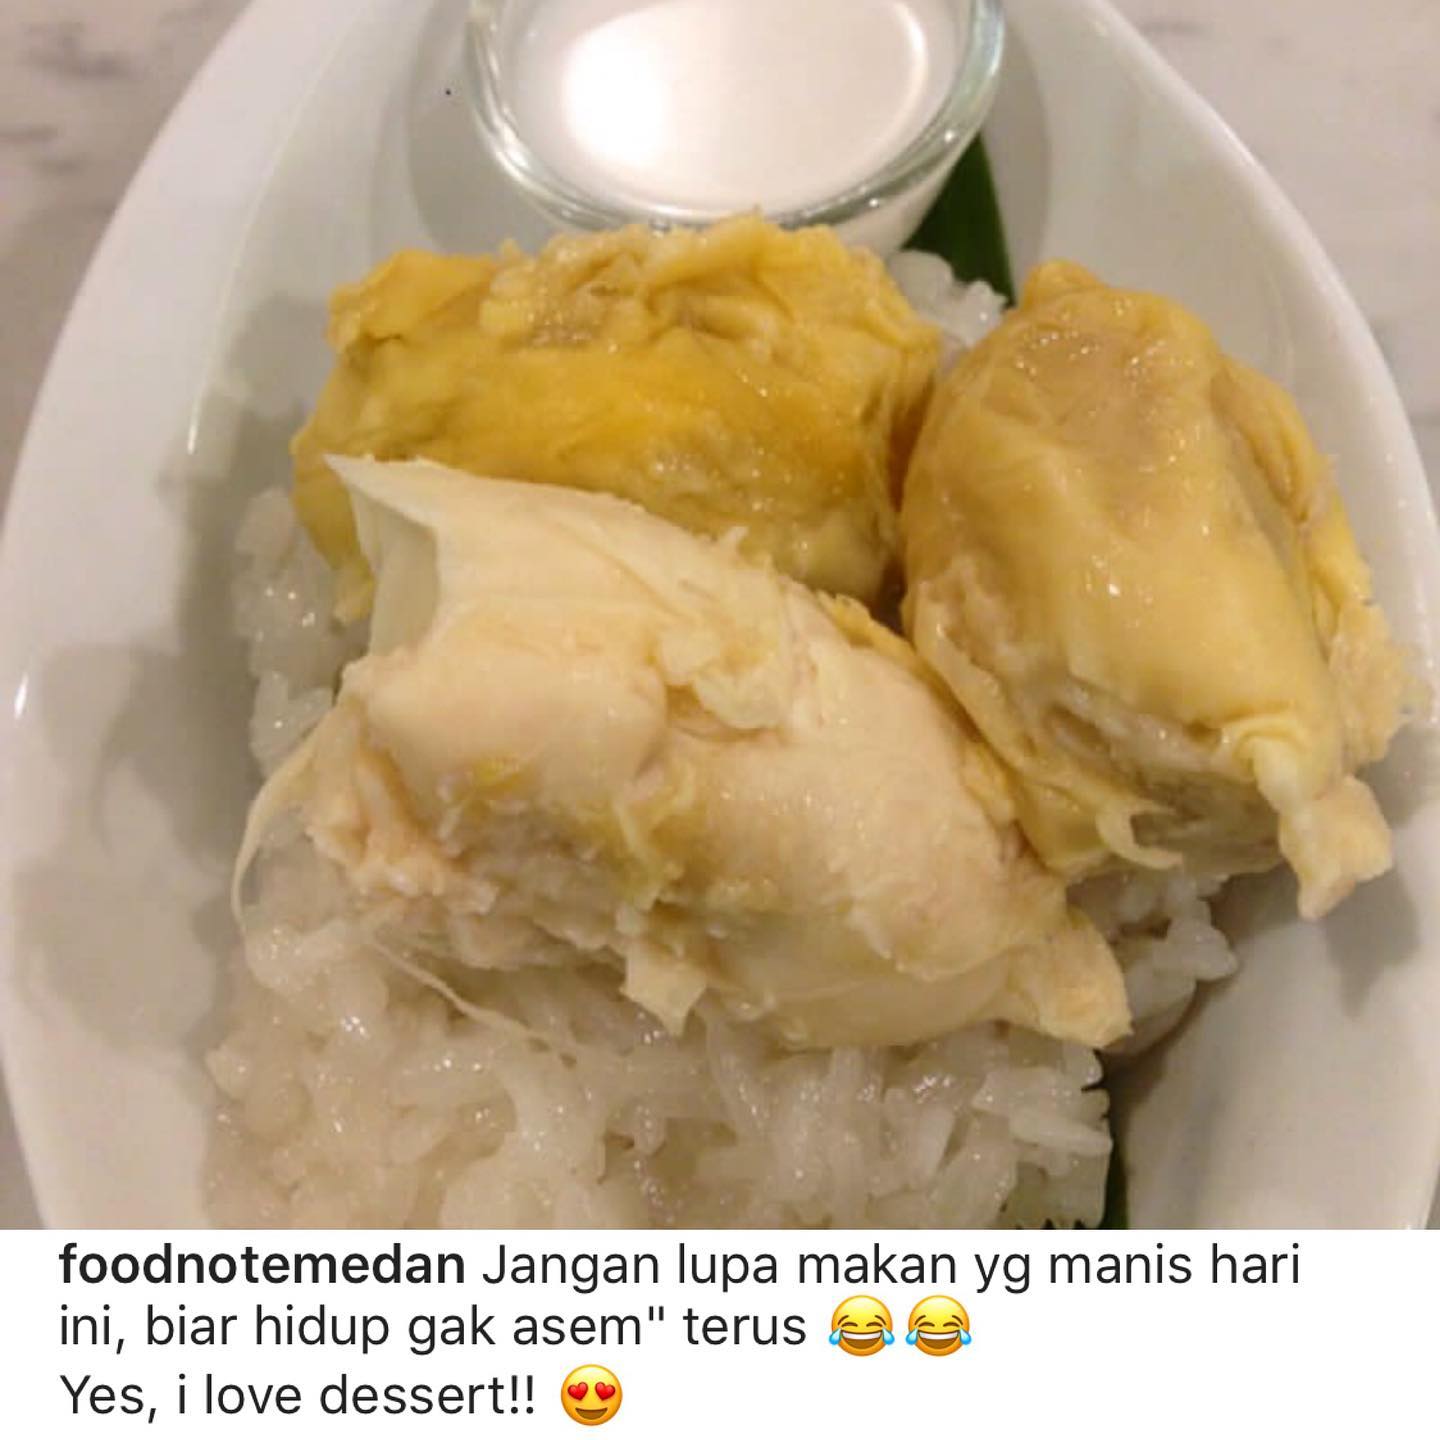 Pulut Durian Kinley!
Mulai musim durian lagi yay!
Yuk jangan lupa makan yang manis
Thank you for sharing @footnotemedan 
Read more